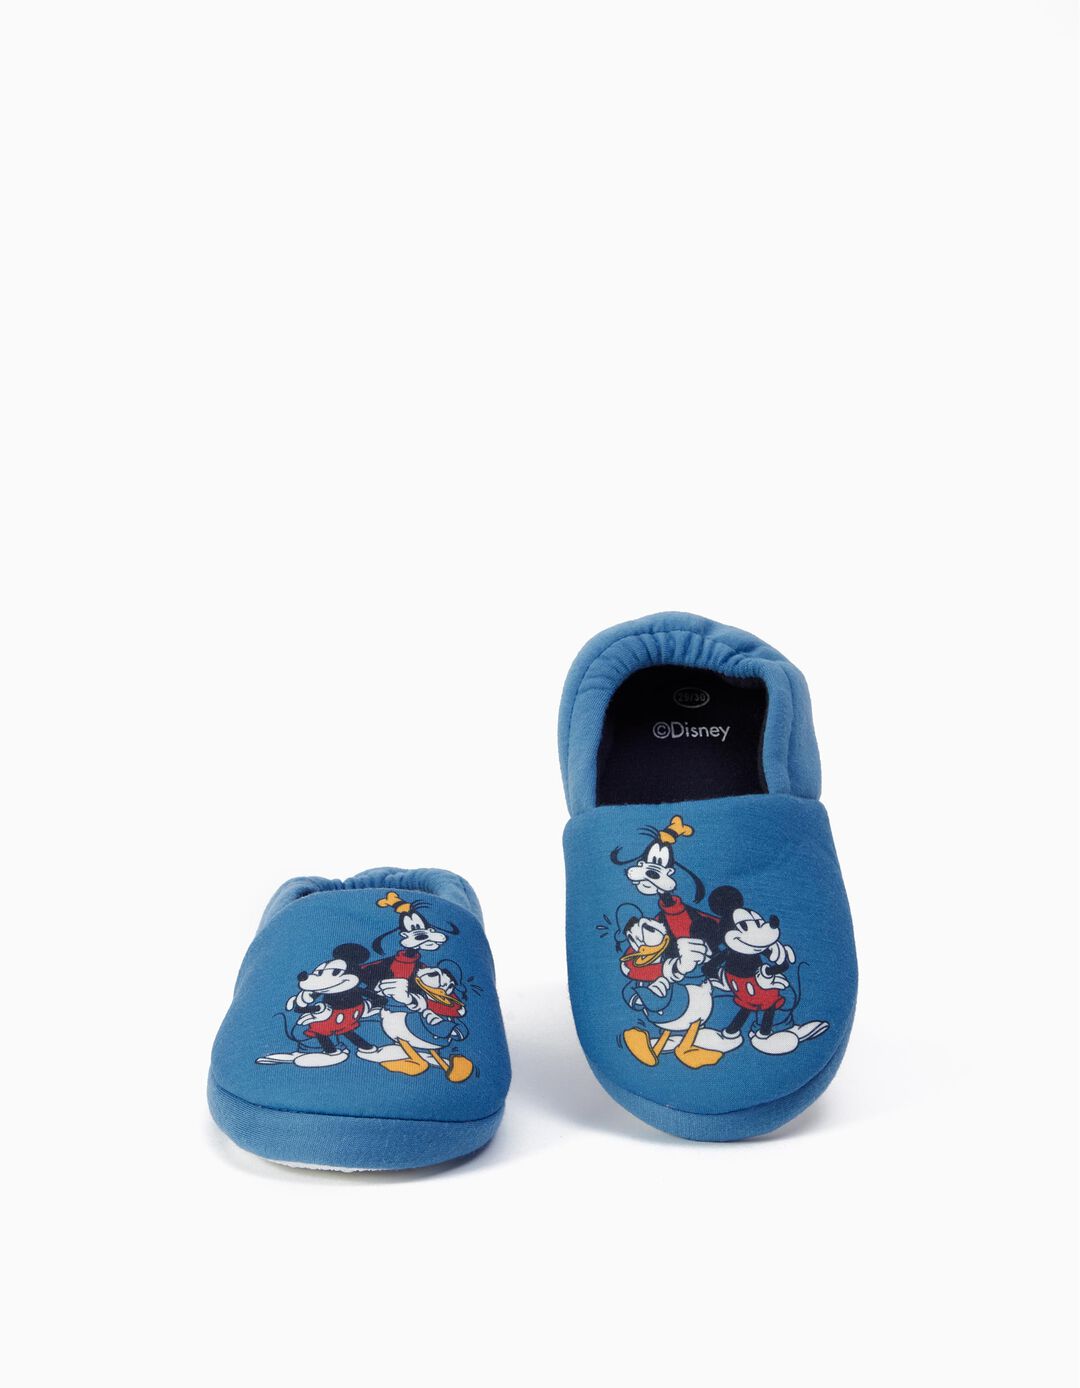 Disney' Slippers, Boys, Blue